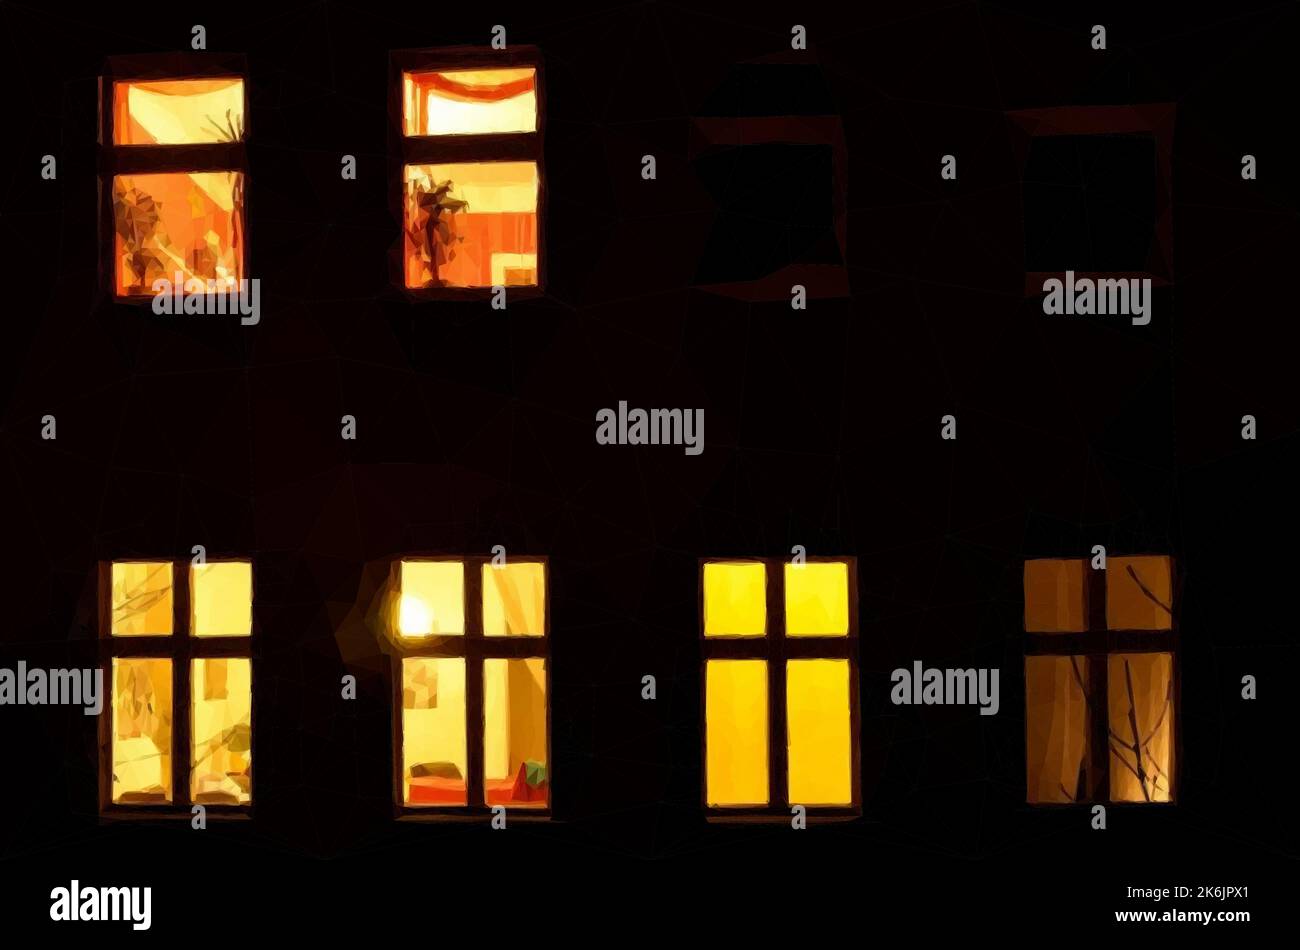 Voyeur window Stock Vector Images - Alamy